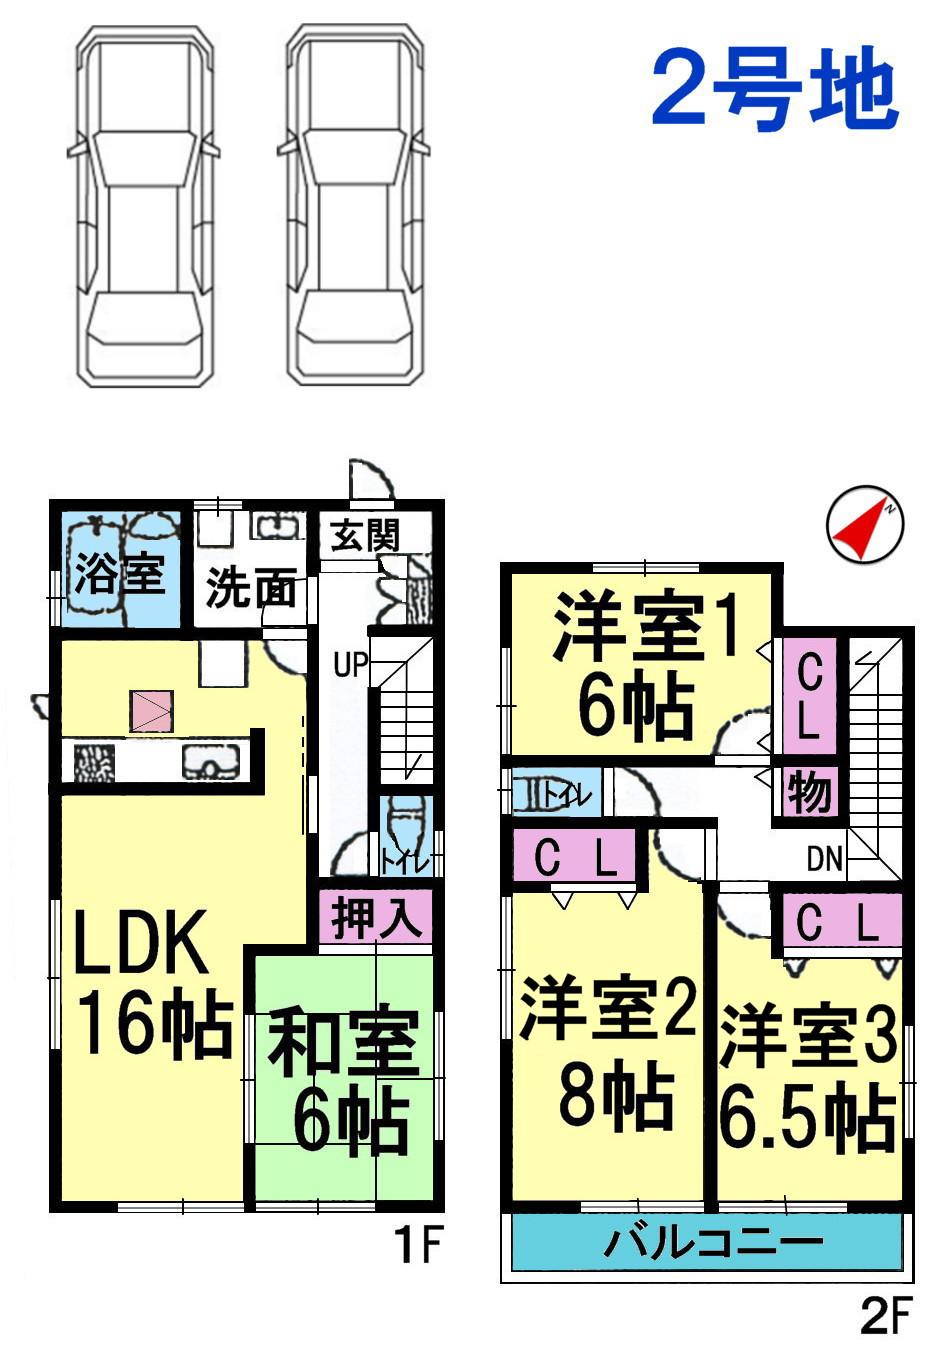 Floor plan. (No. 2 locations), Price 32,800,000 yen, 4LDK, Land area 140.05 sq m , Building area 102.67 sq m